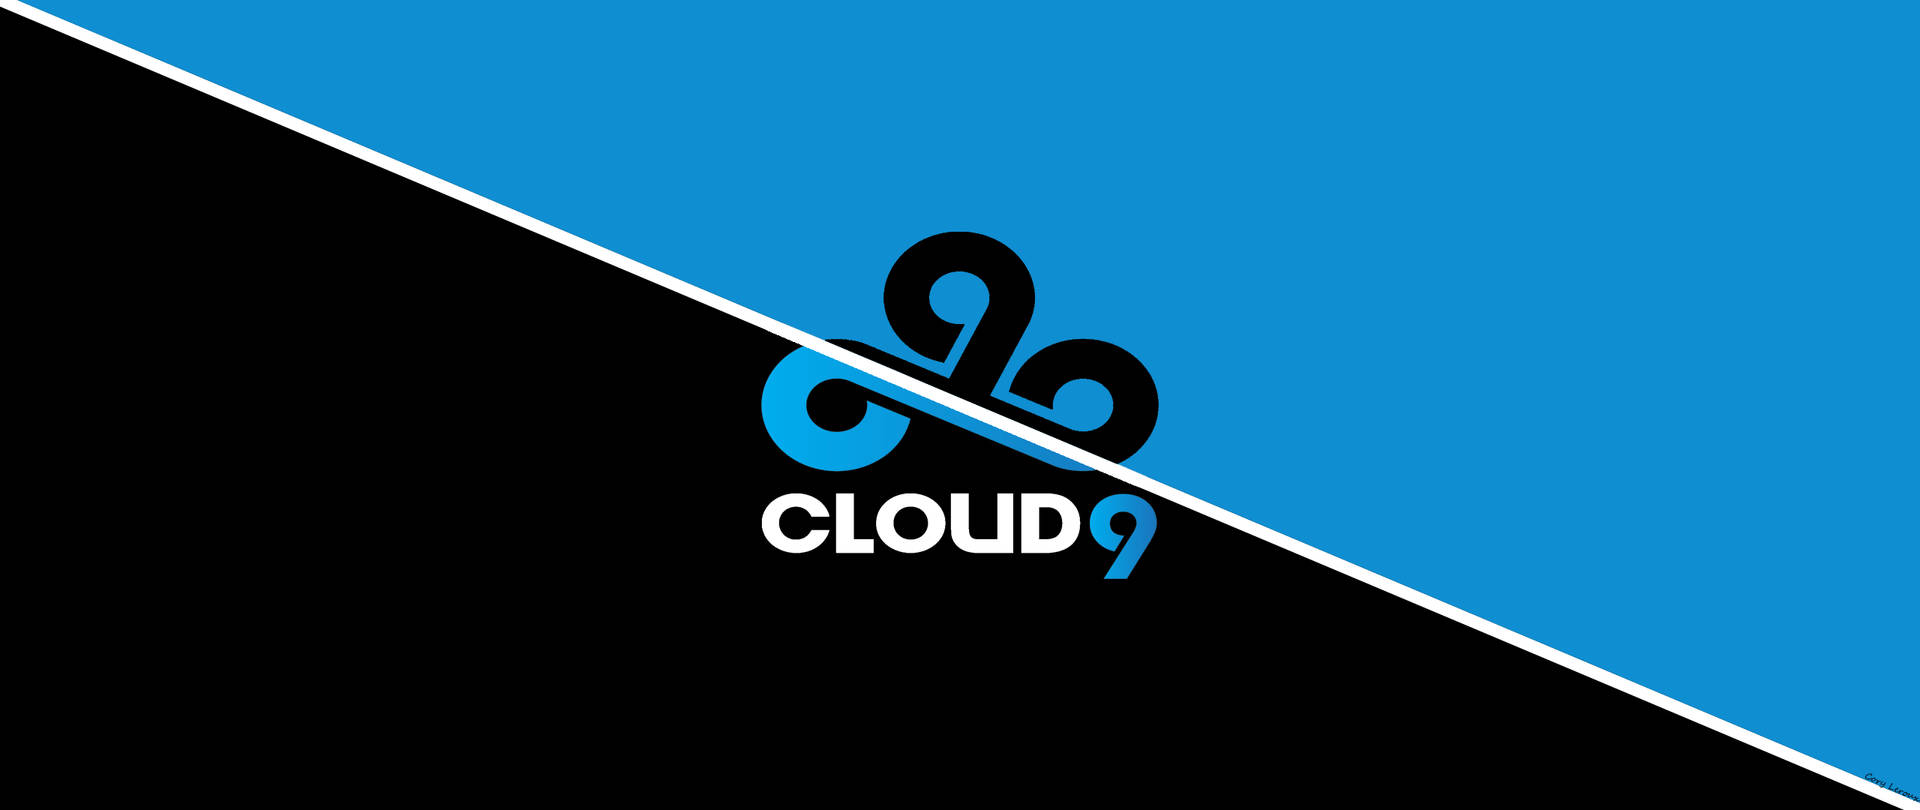 Horizontally Cut Cloud9 Logo Background